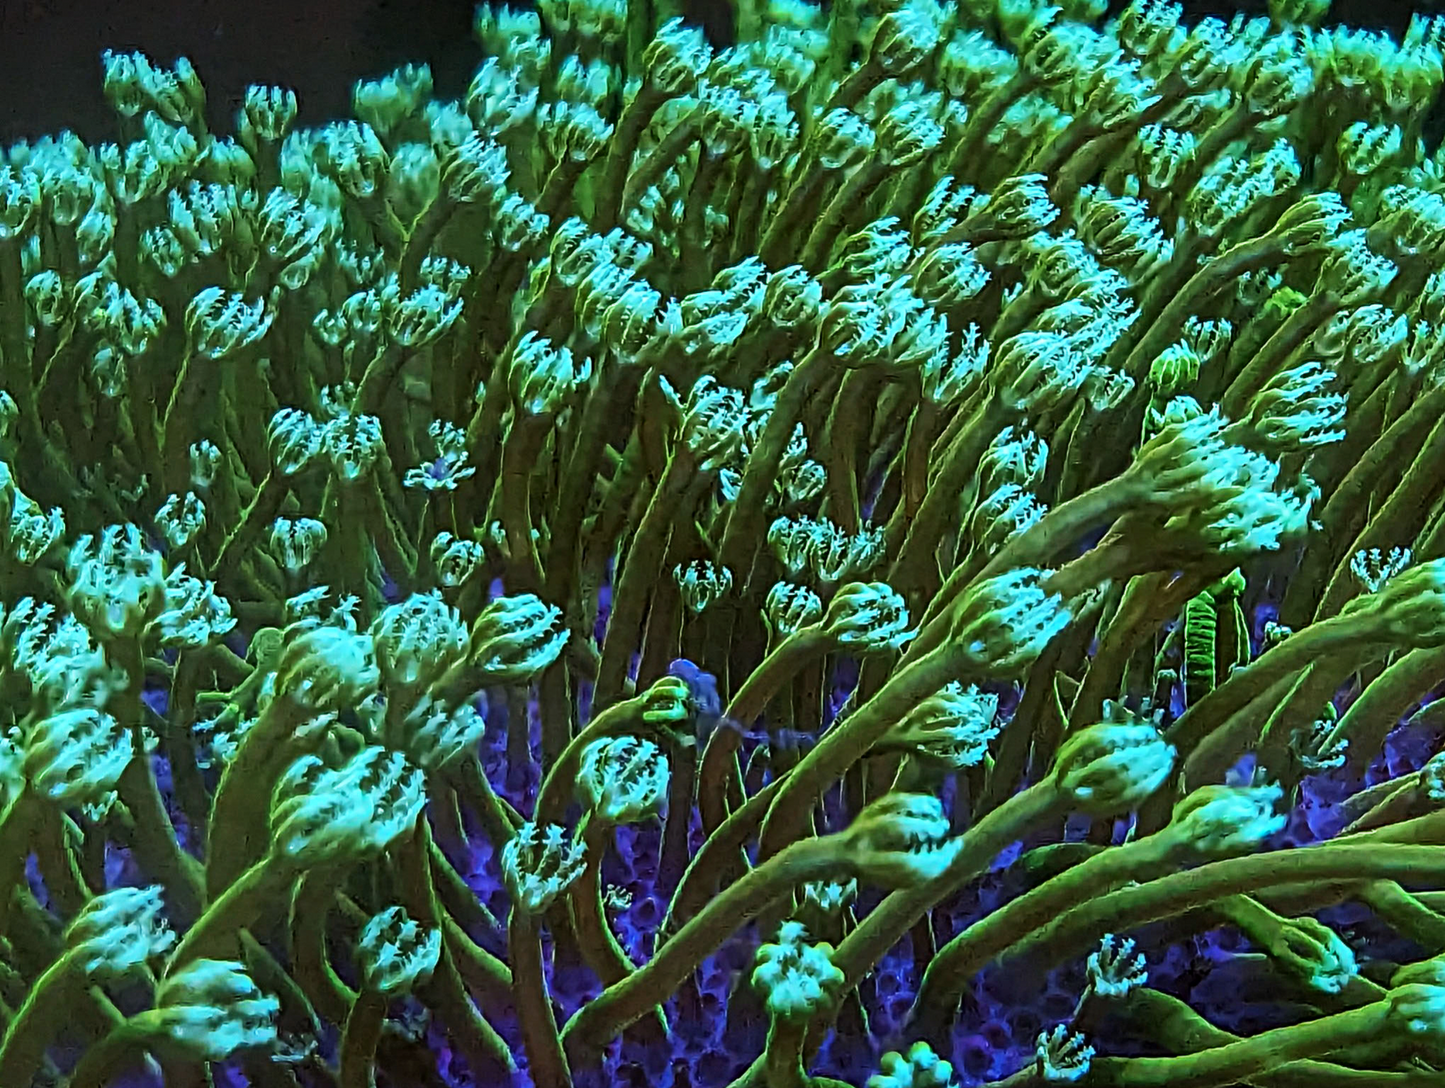 Sarcophyton galaucum - Green polyp